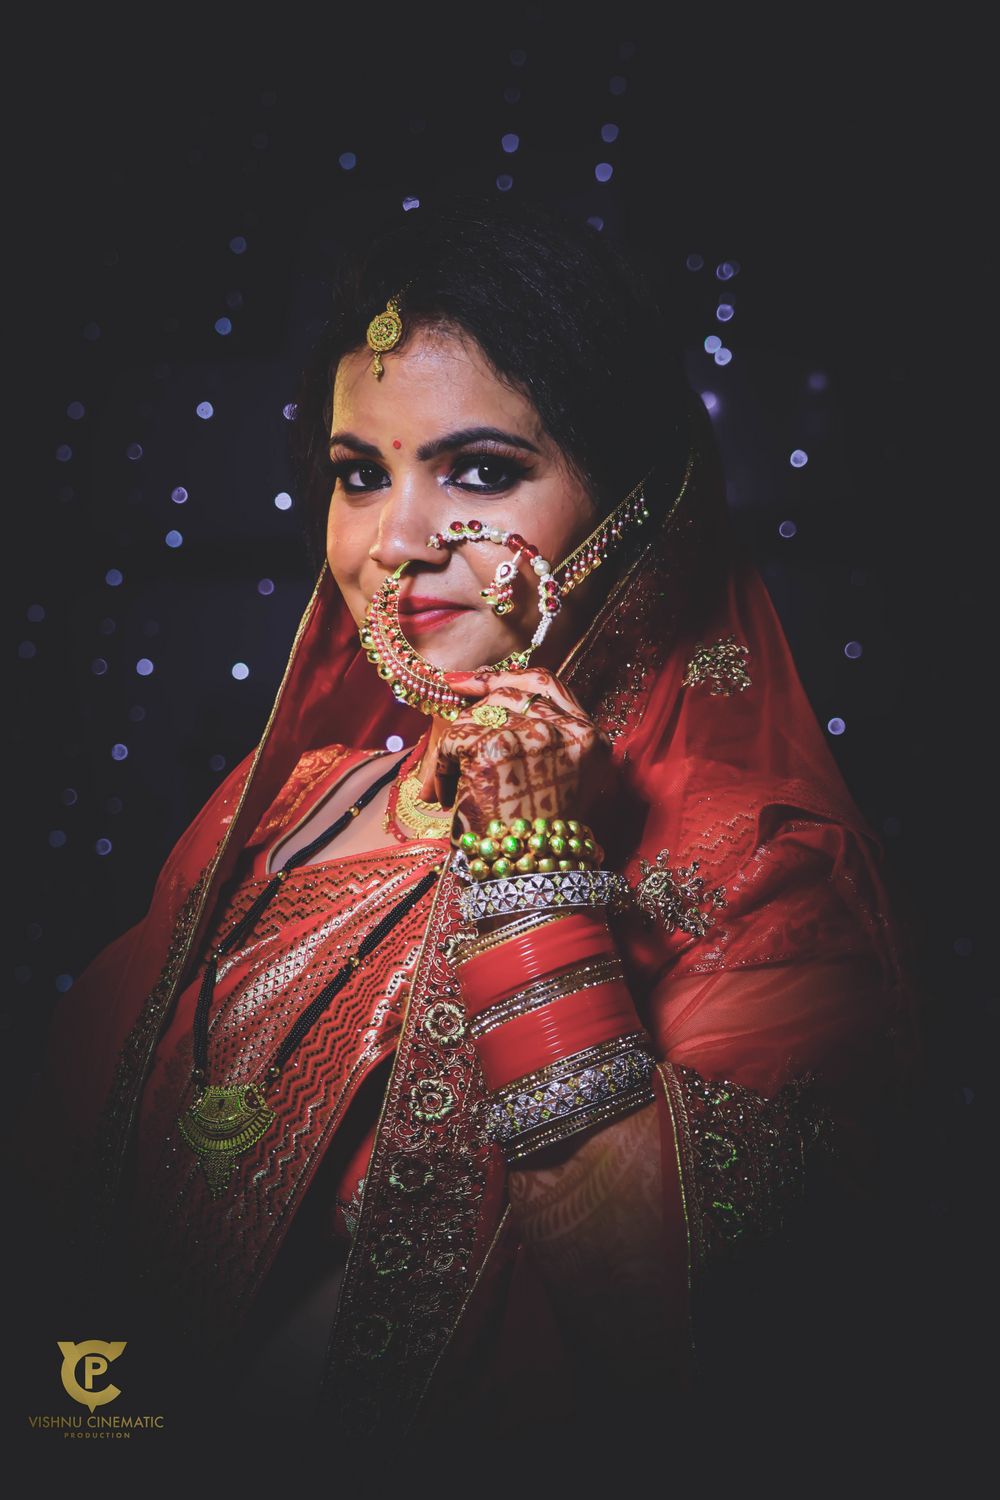 Photo From wedding shoot - By Vishnu Cinematic Production